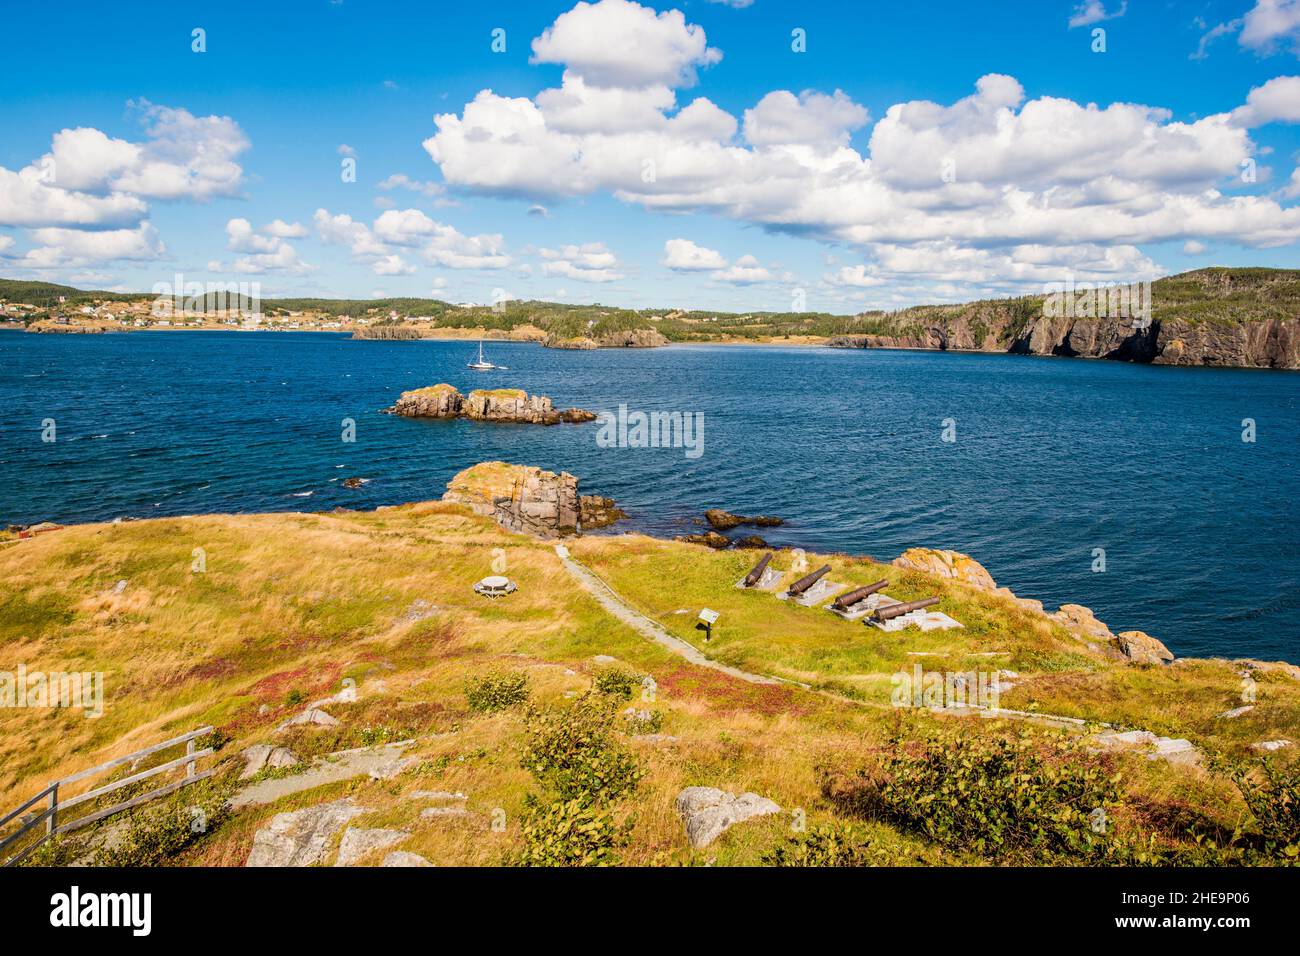 Main cannon battery at Fort Point or Admiral’s Point Lighthouse, Trinity, Bonavista Peninsula, Newfoundland, Canada. Stock Photo